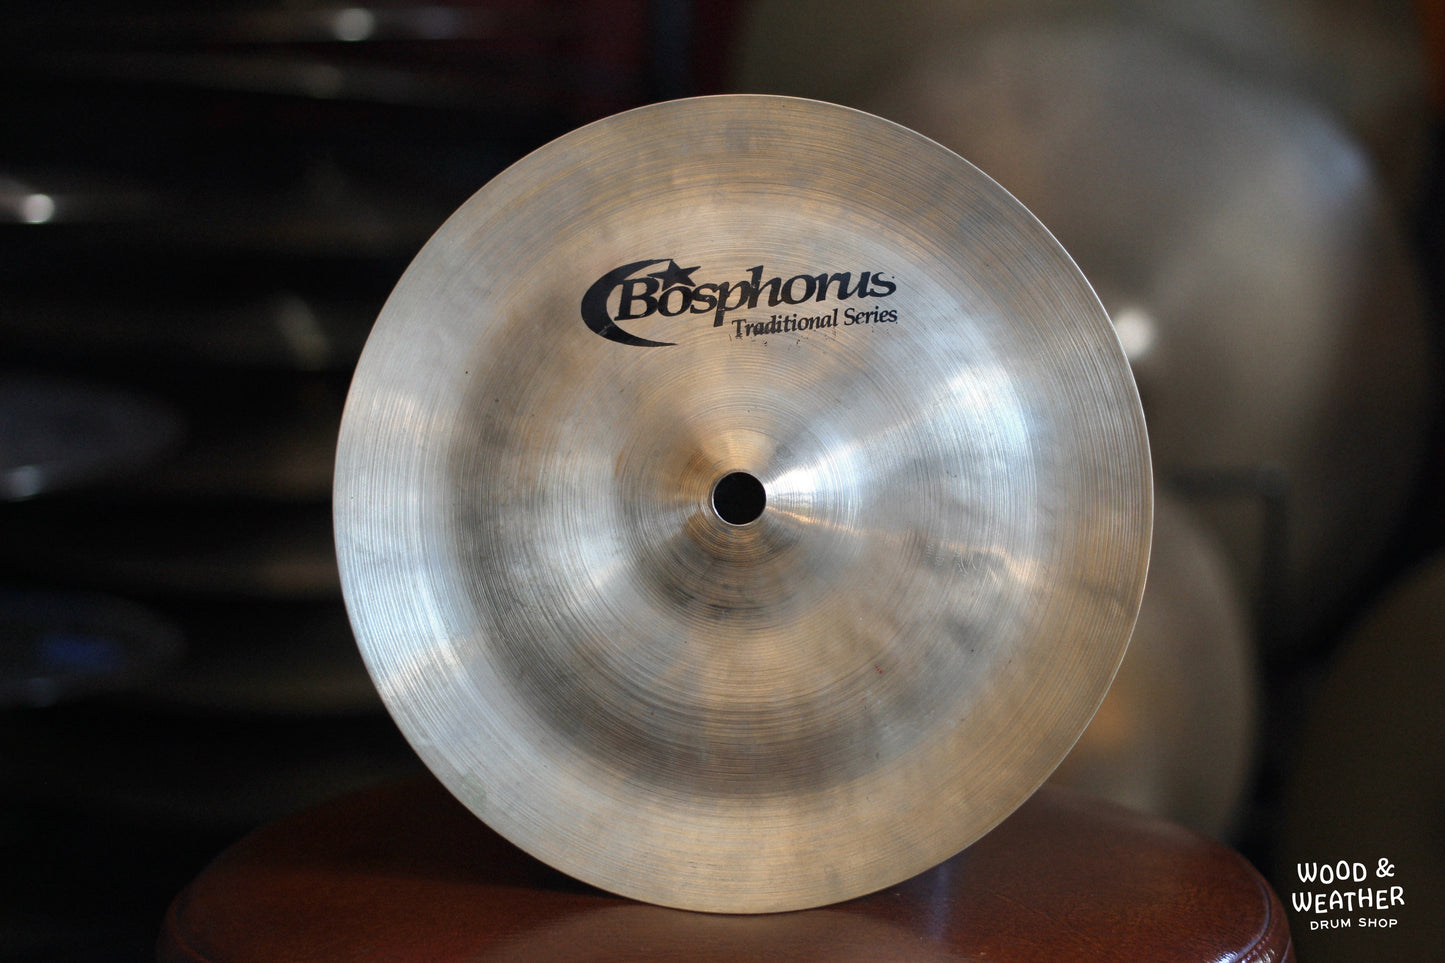 Used Bosphorus 8" Traditional Series China Cymbal 146g